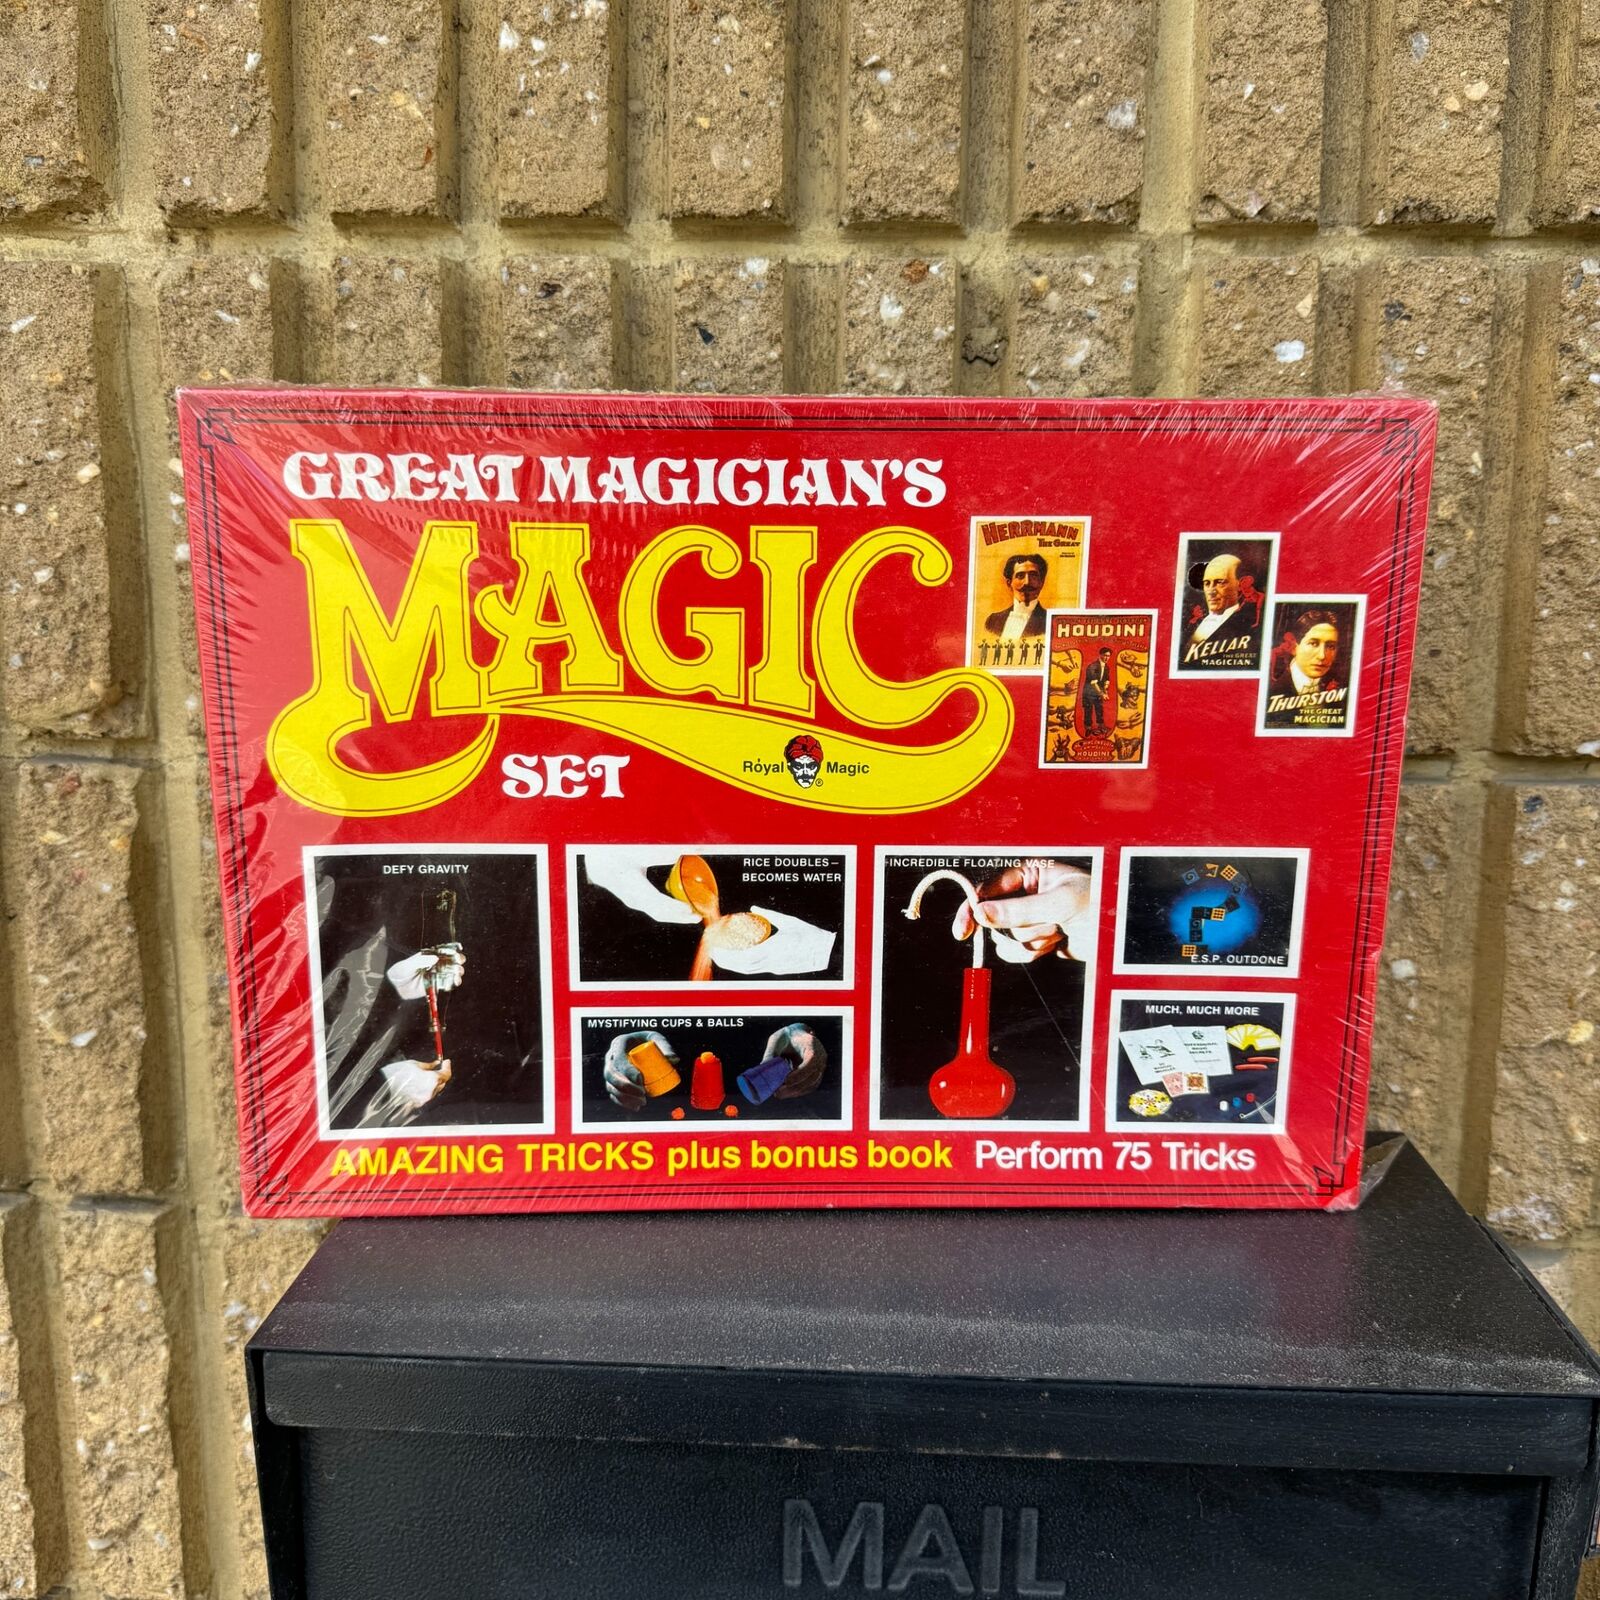 VTG c.1980s Great Magician's Magic Set w/ 75 Tricks by Royal Magic New / Sealed 